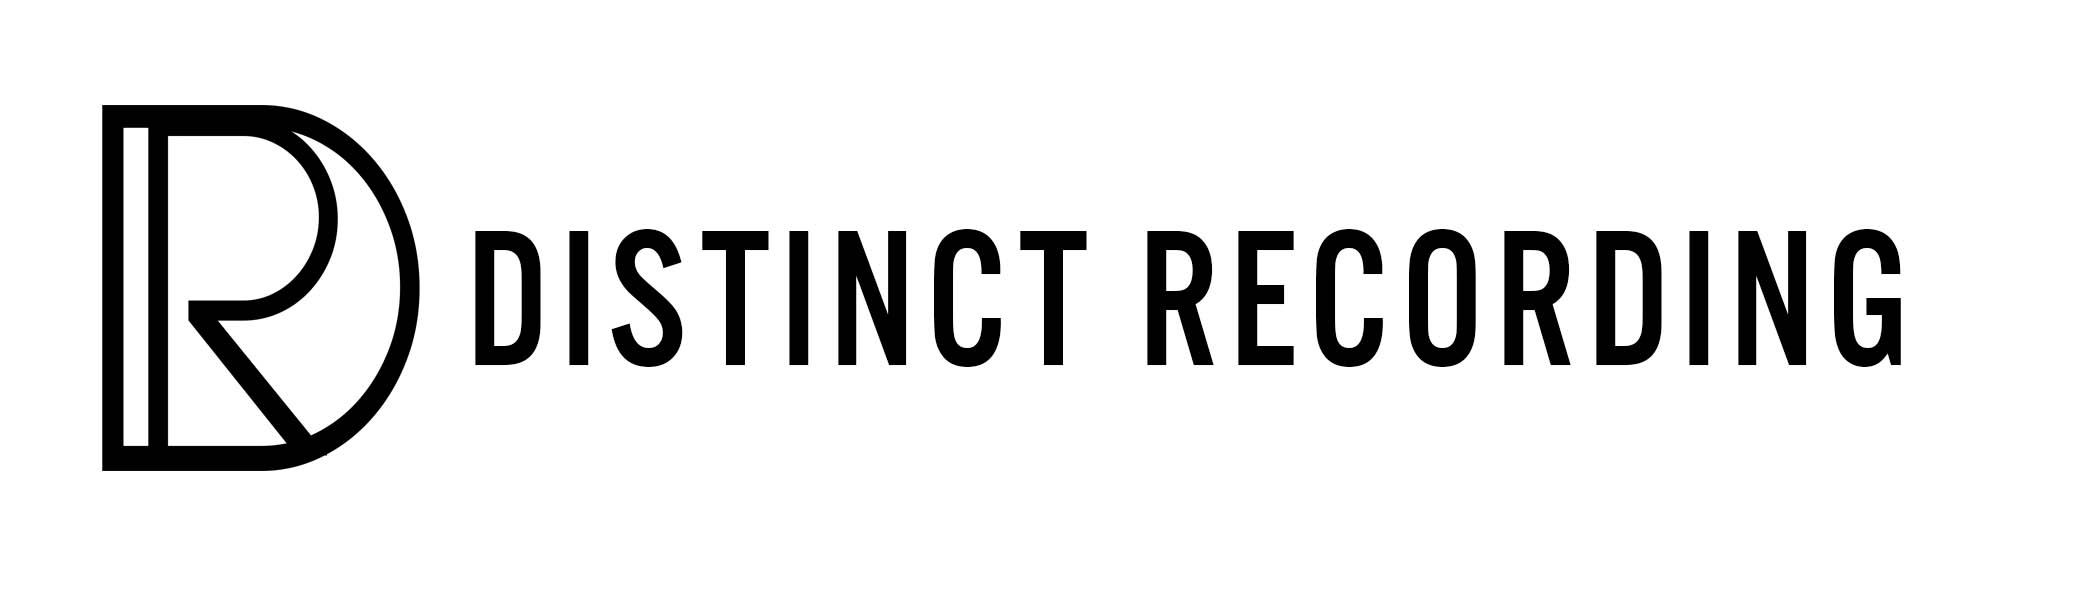 DISTINCT RECORDING